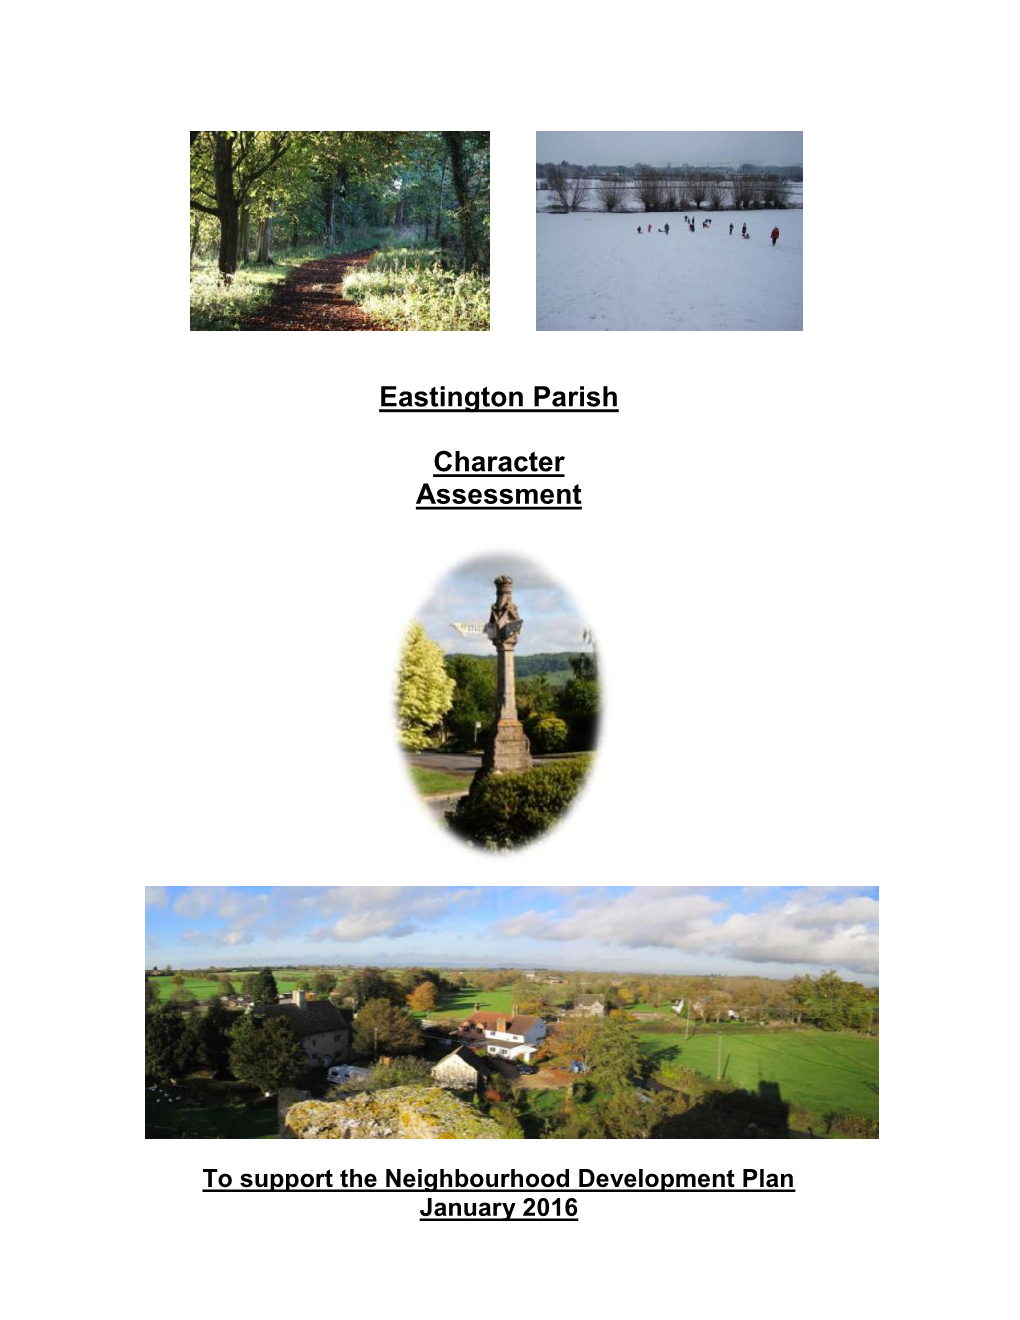 Eastington Parish Character Assessment